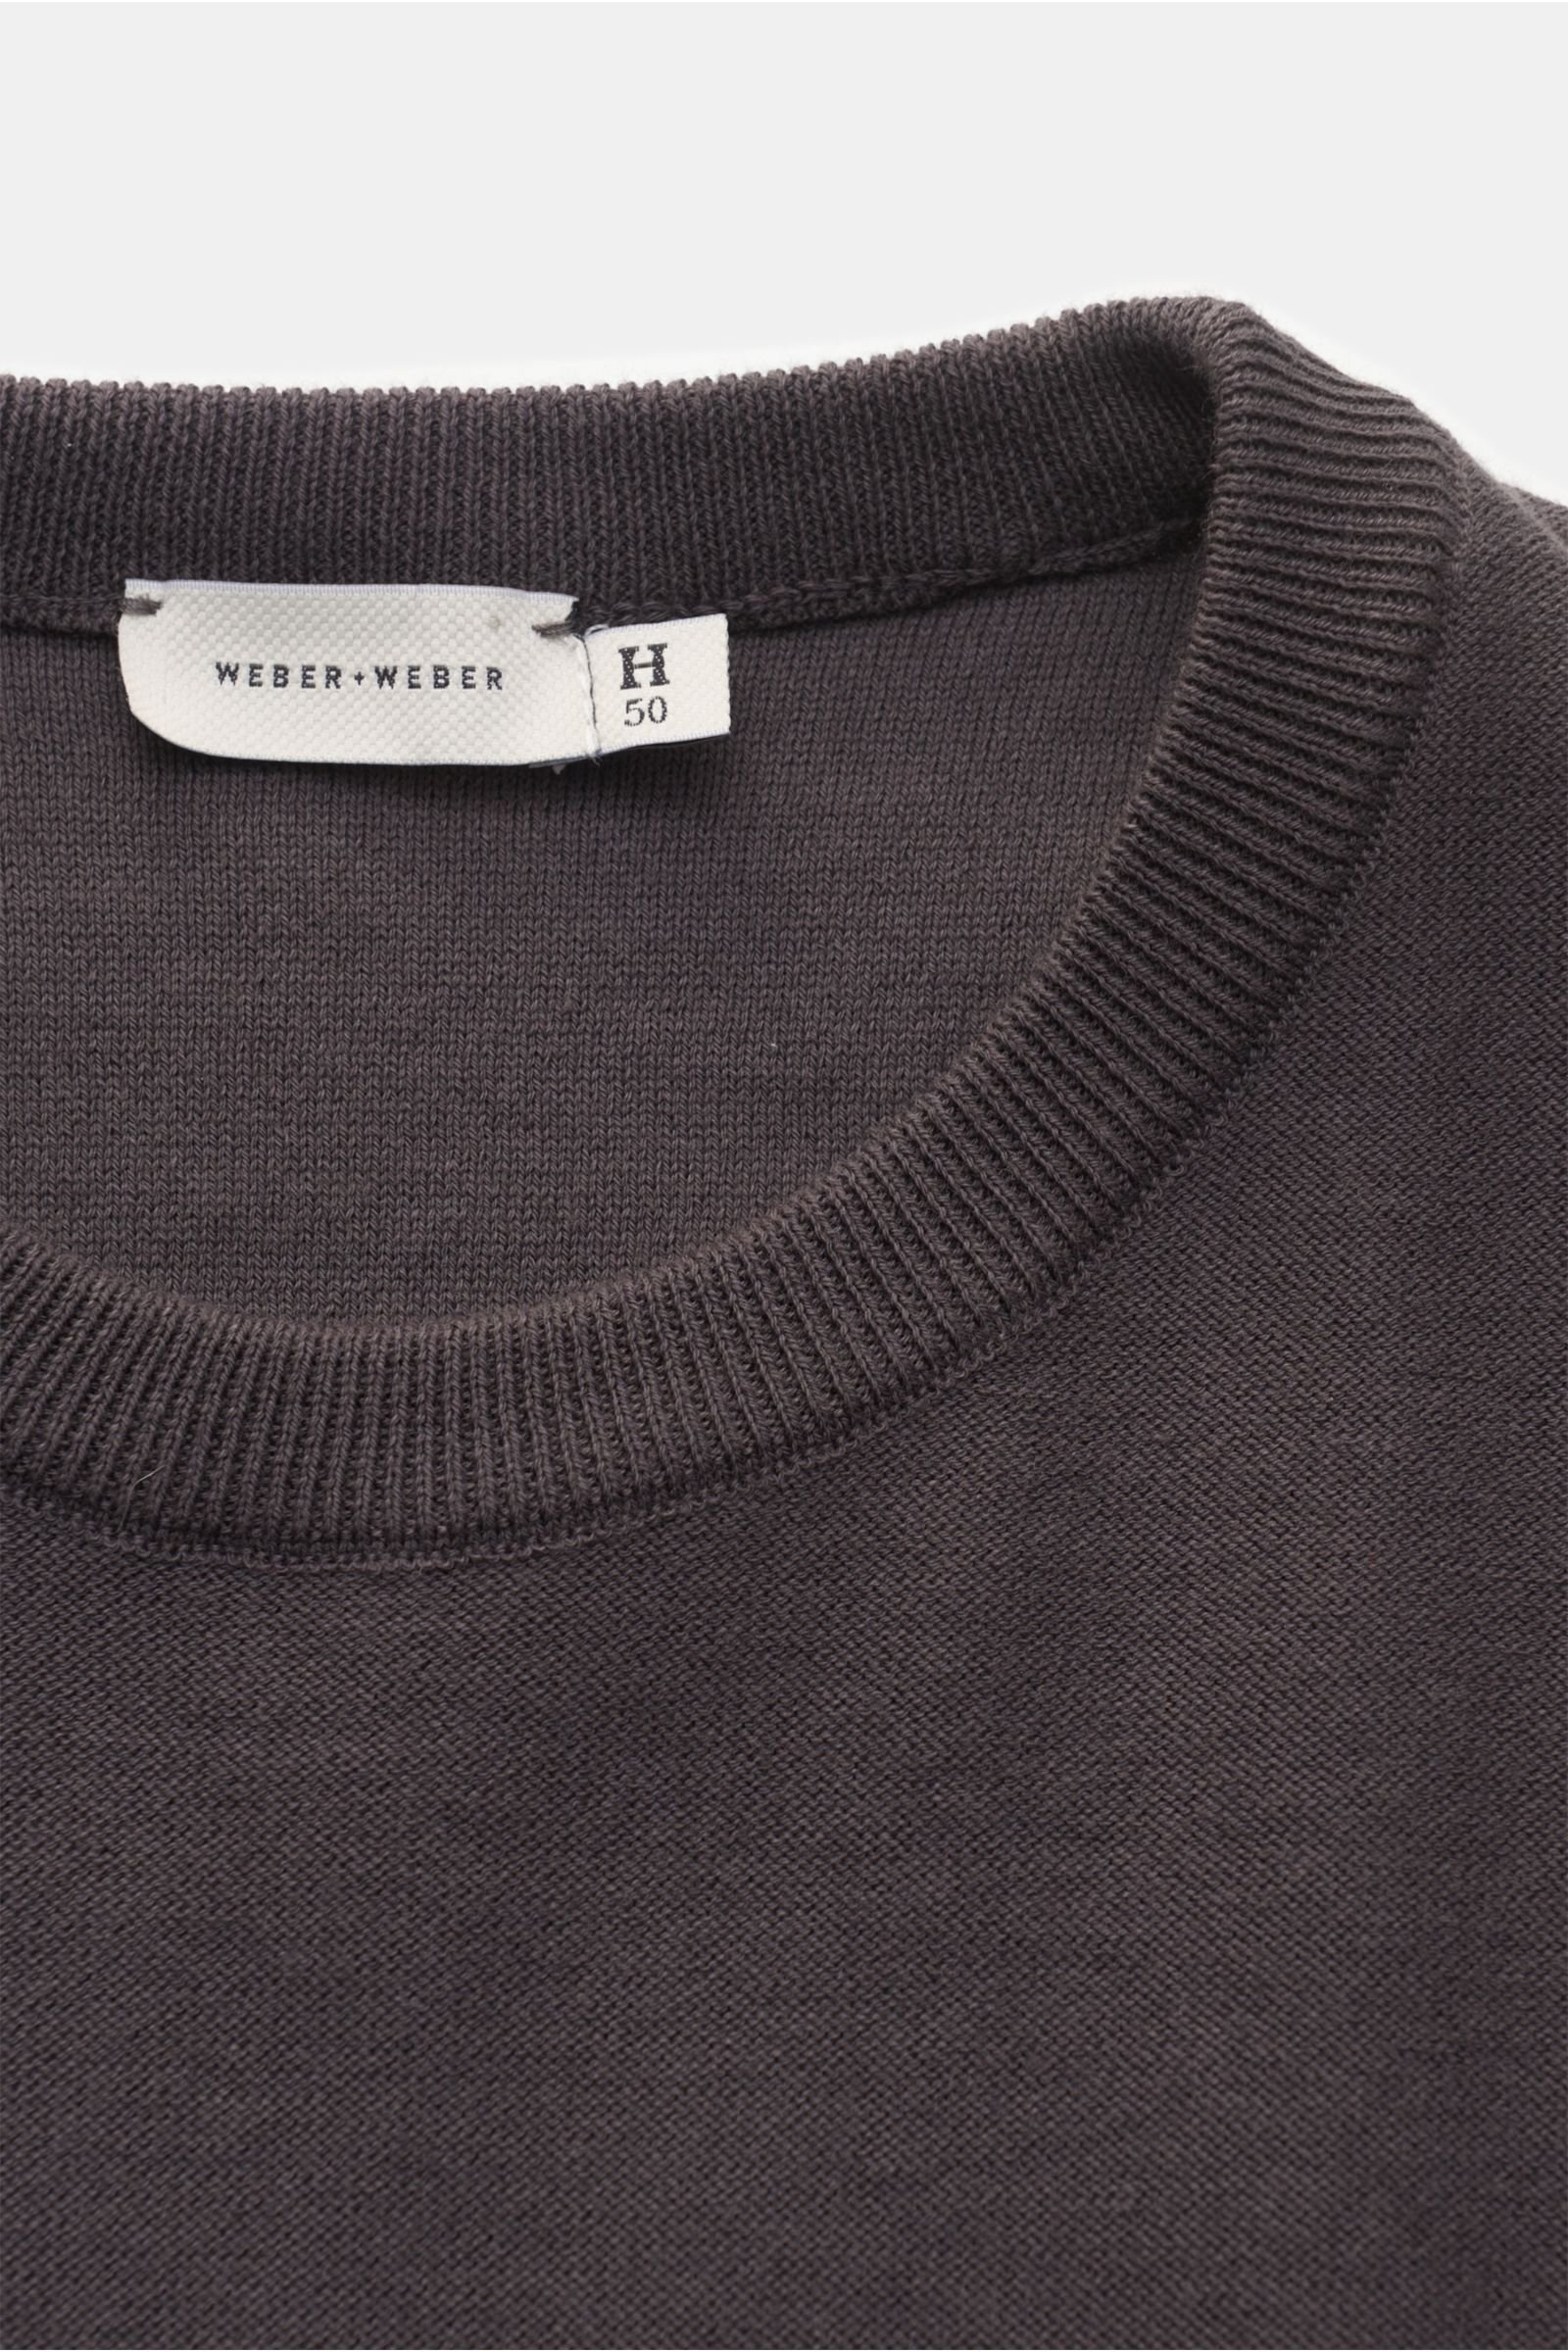 WEBER+WEBER short sleeve crew neck jumper 'Cotton Knit' dark grey